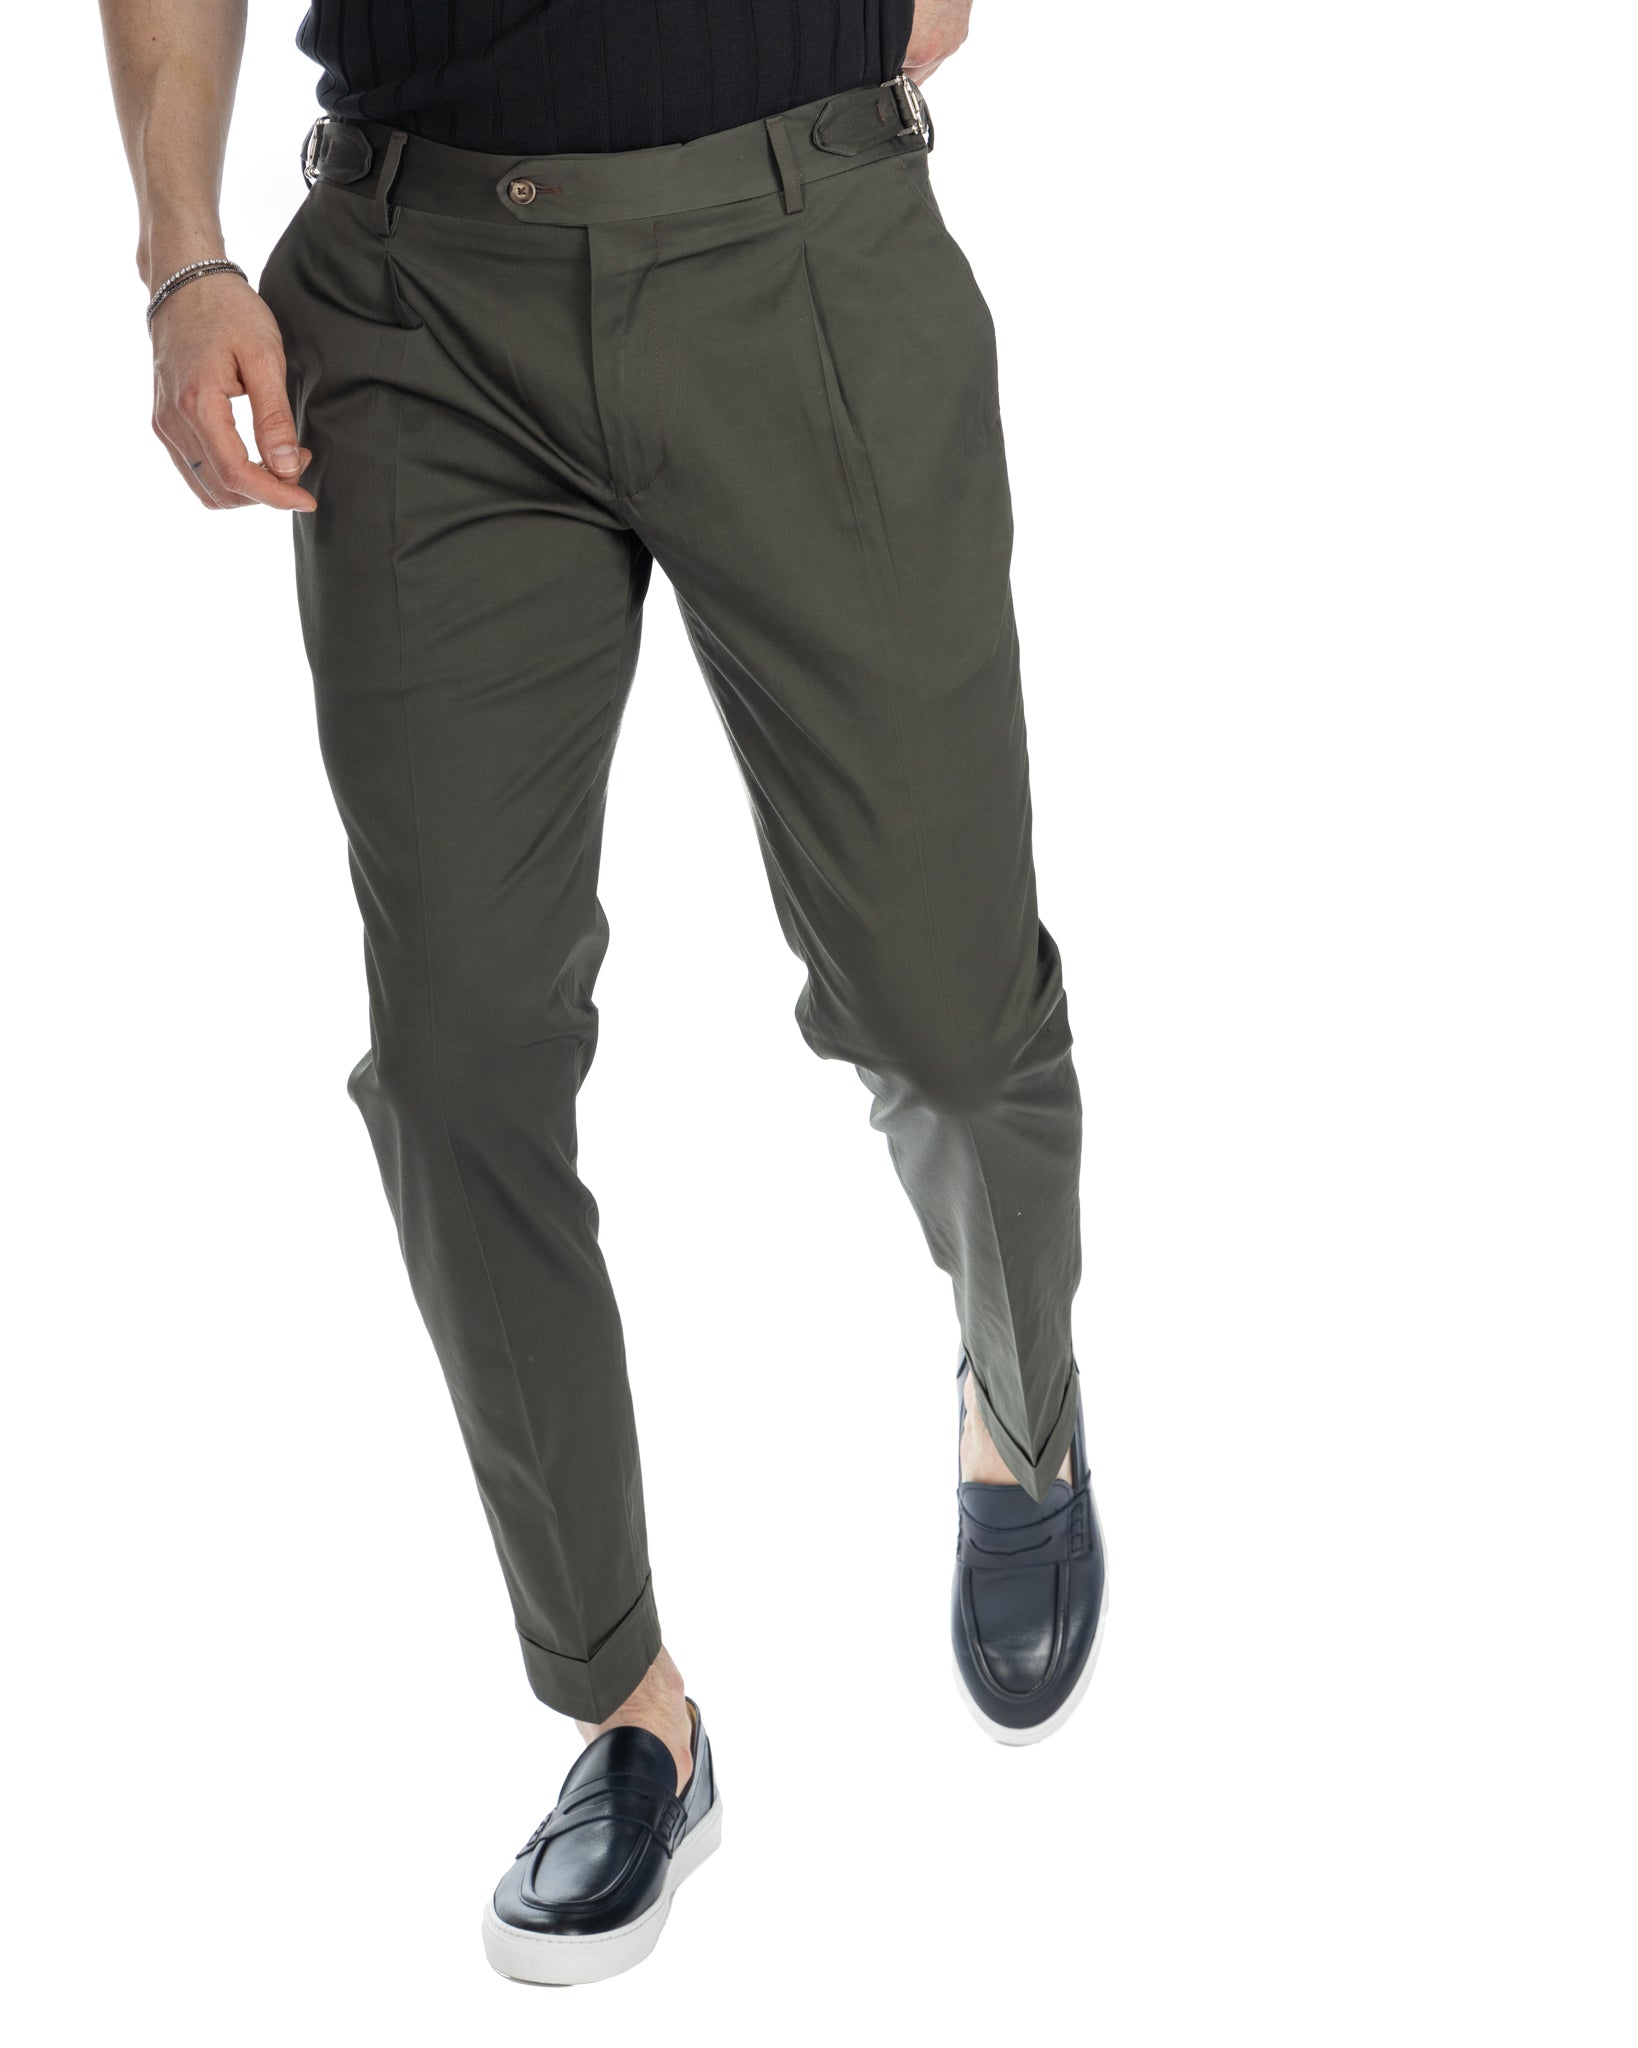 James - pantalone militare con fibbie